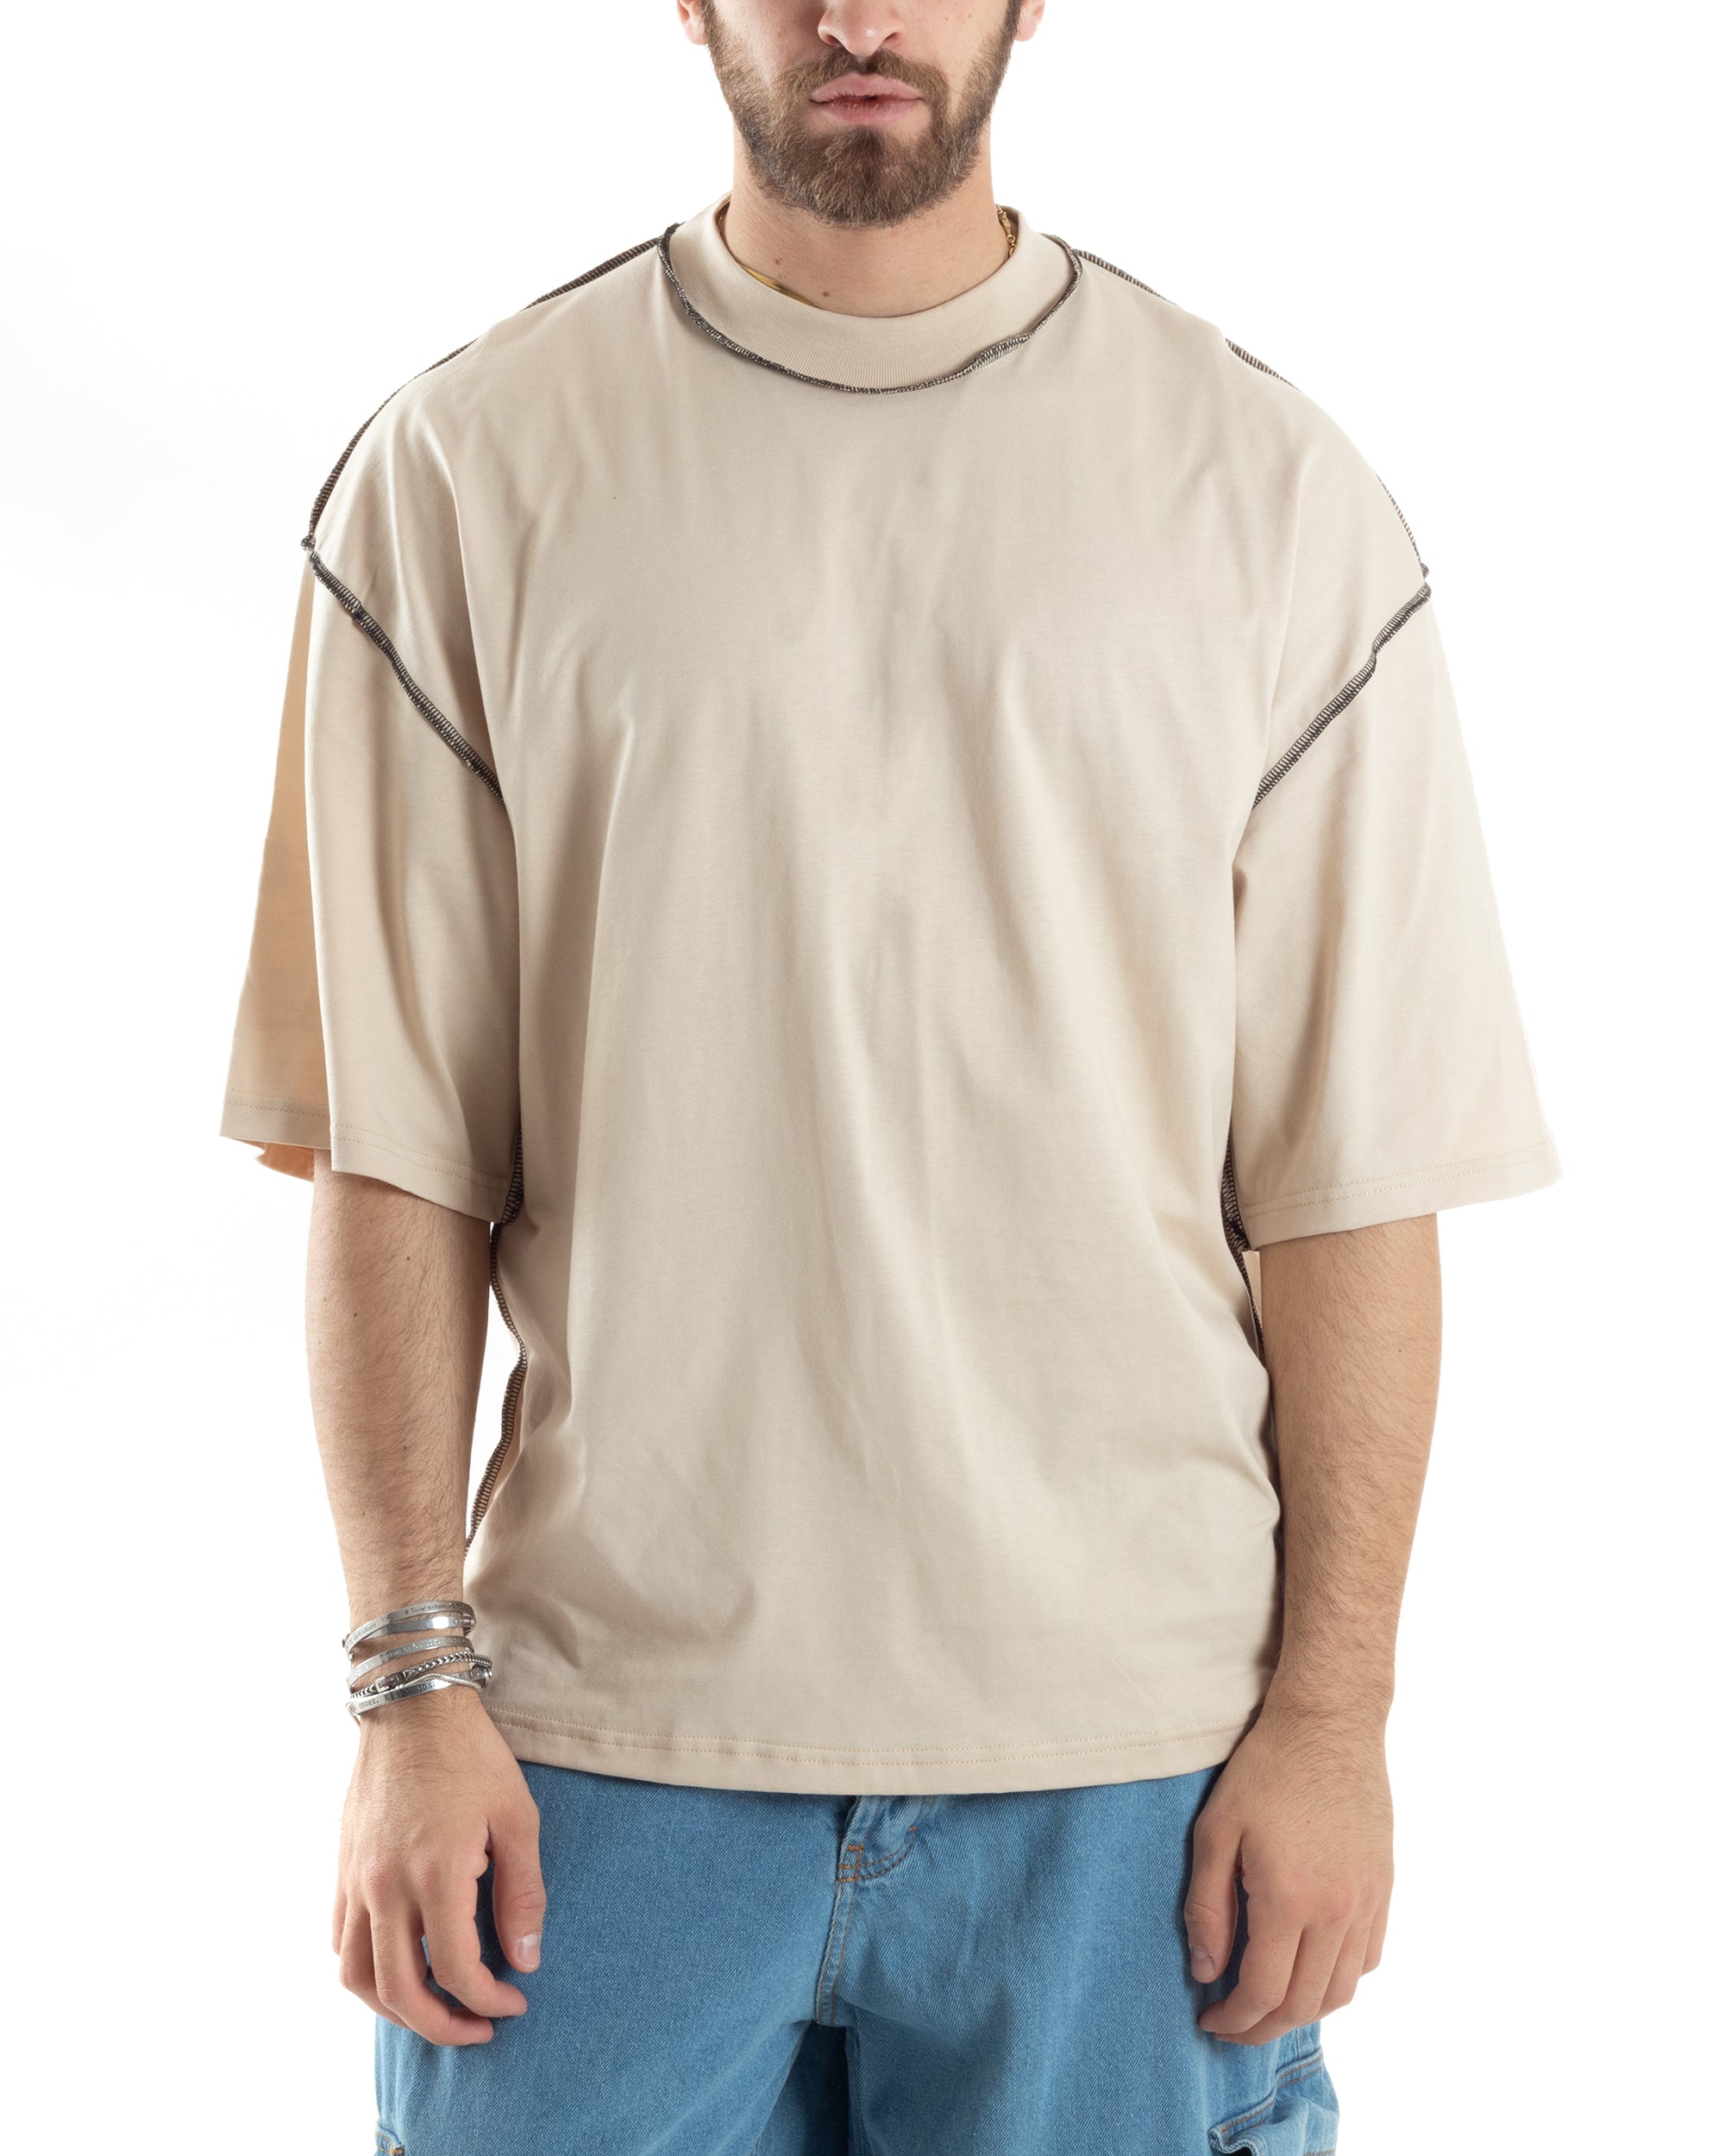 T-shirt Uomo Girocollo Boxy Fit Oversize Spalla Scesa Gola Alta Cuciture A Contrasto Cotone Beige GIOSAL-TS3034A